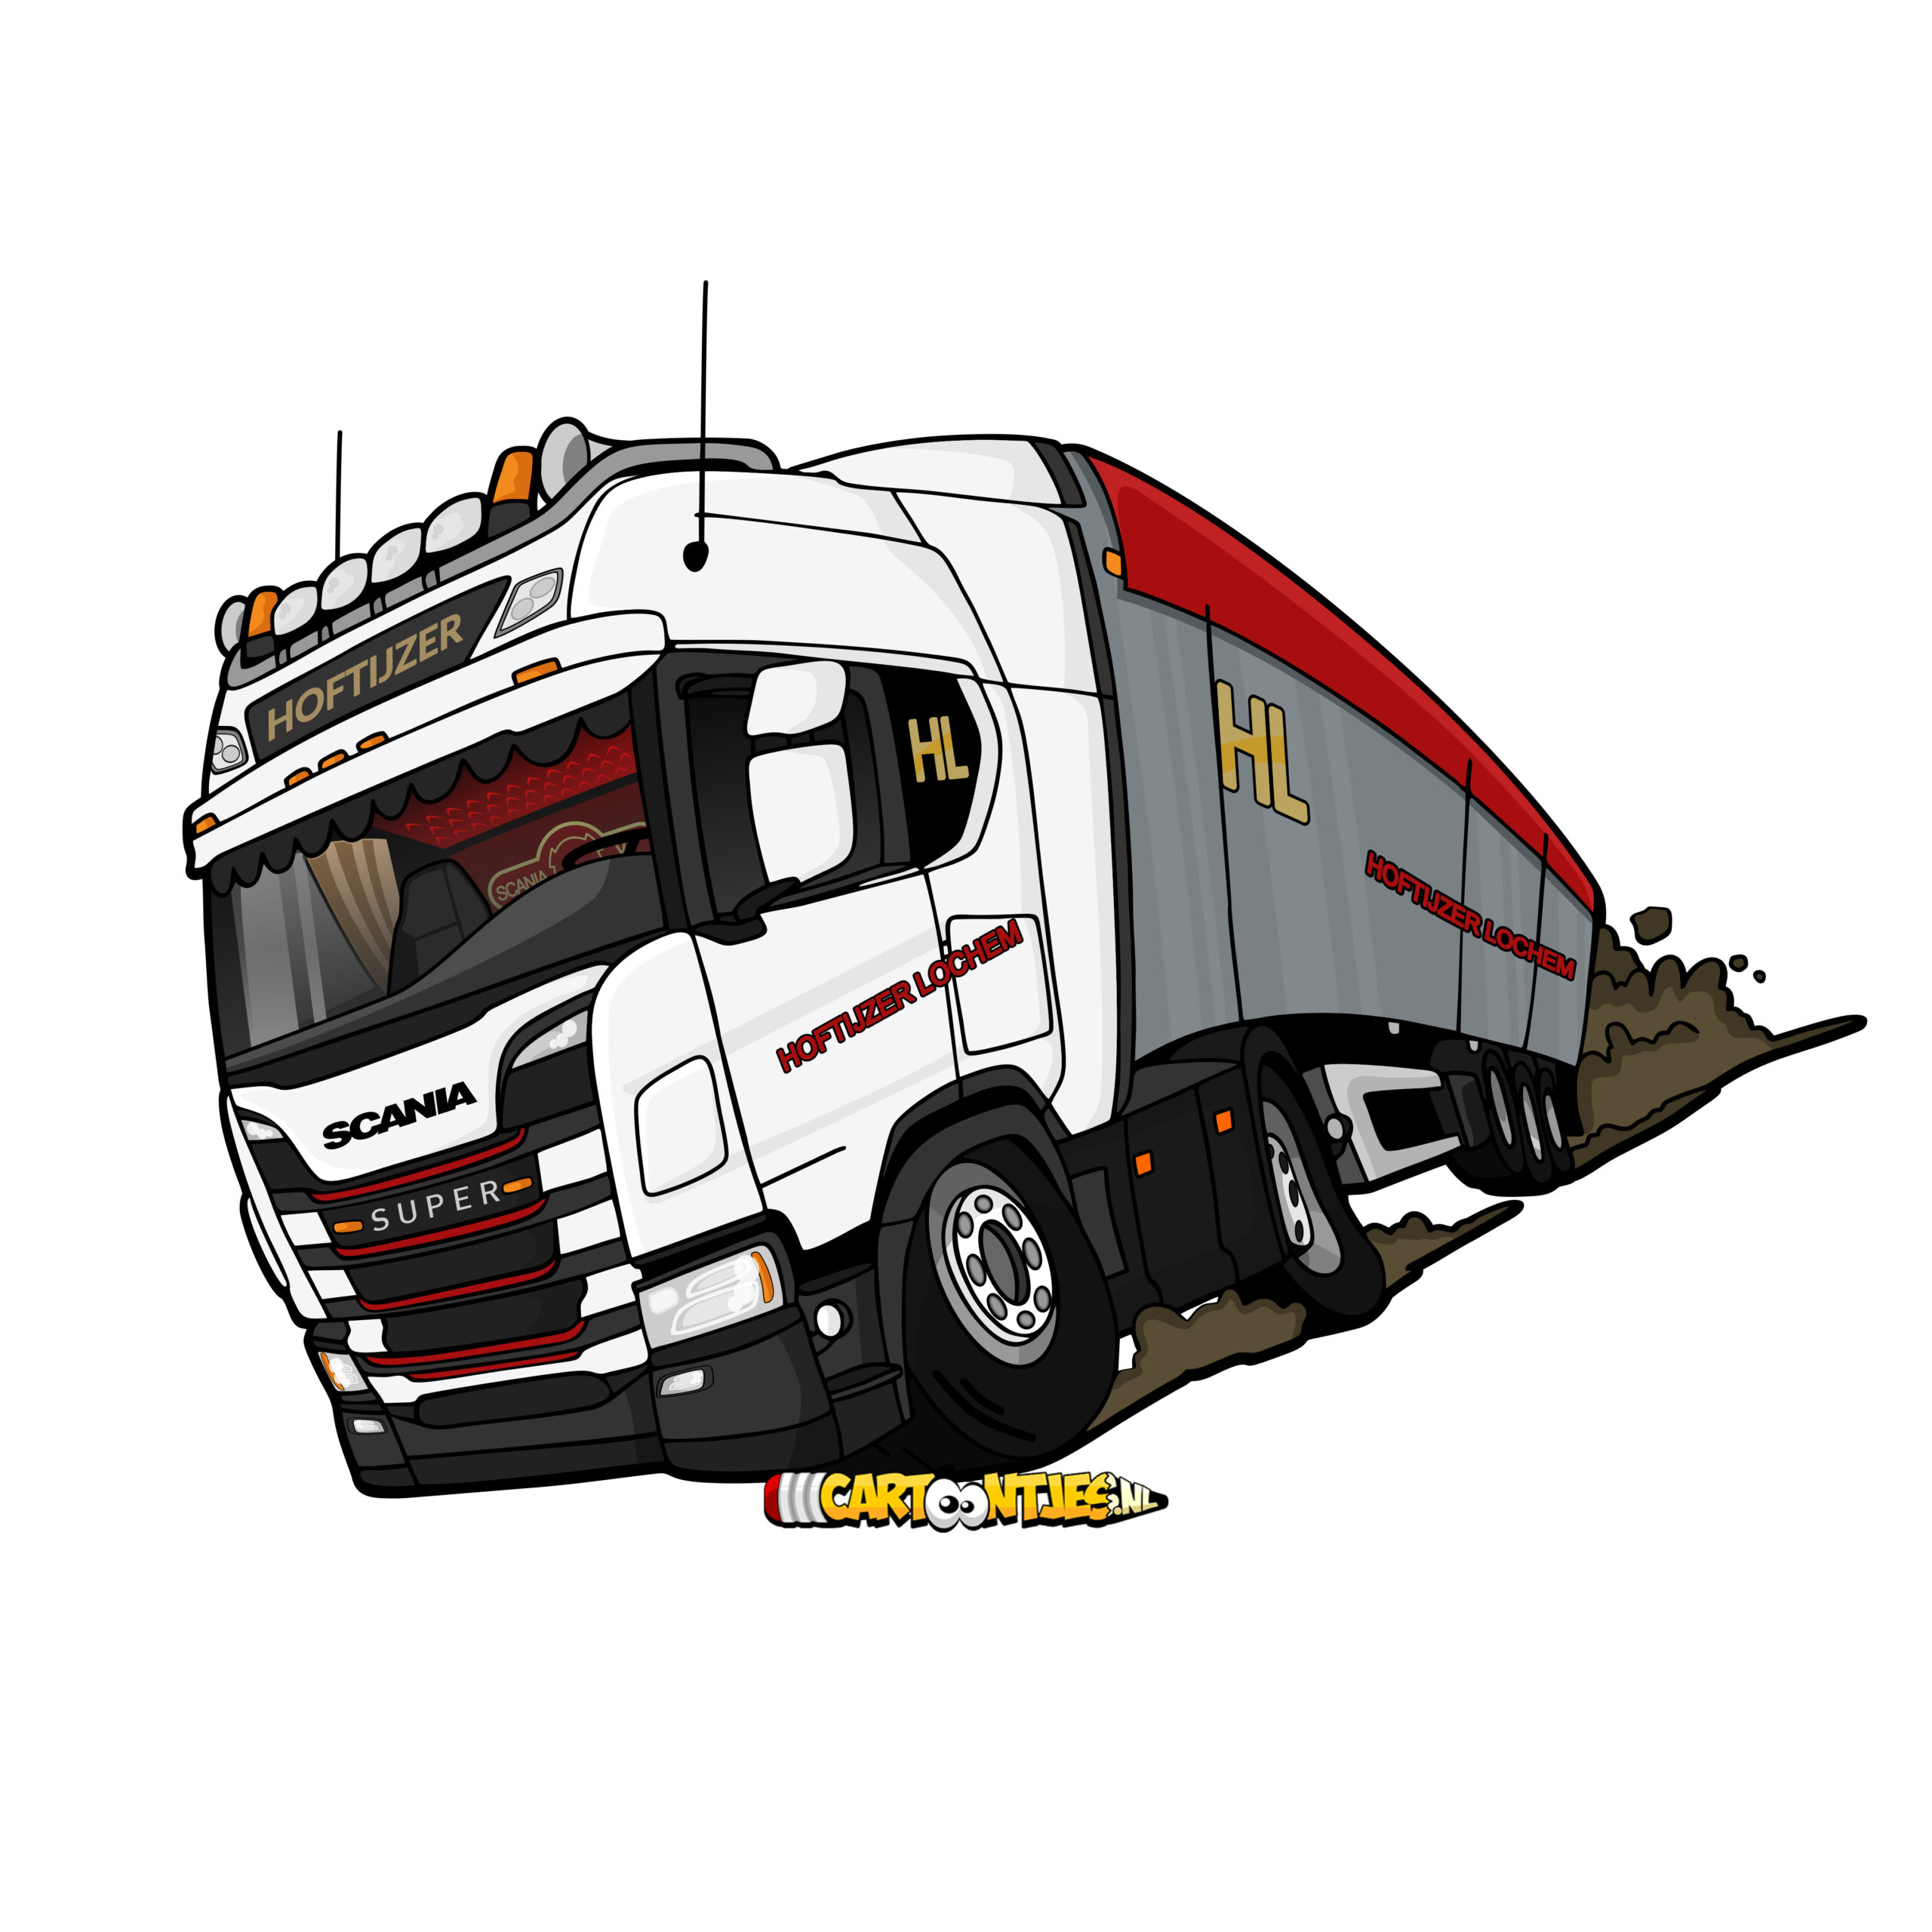 truck-cartoon-hoftijzer-lochem